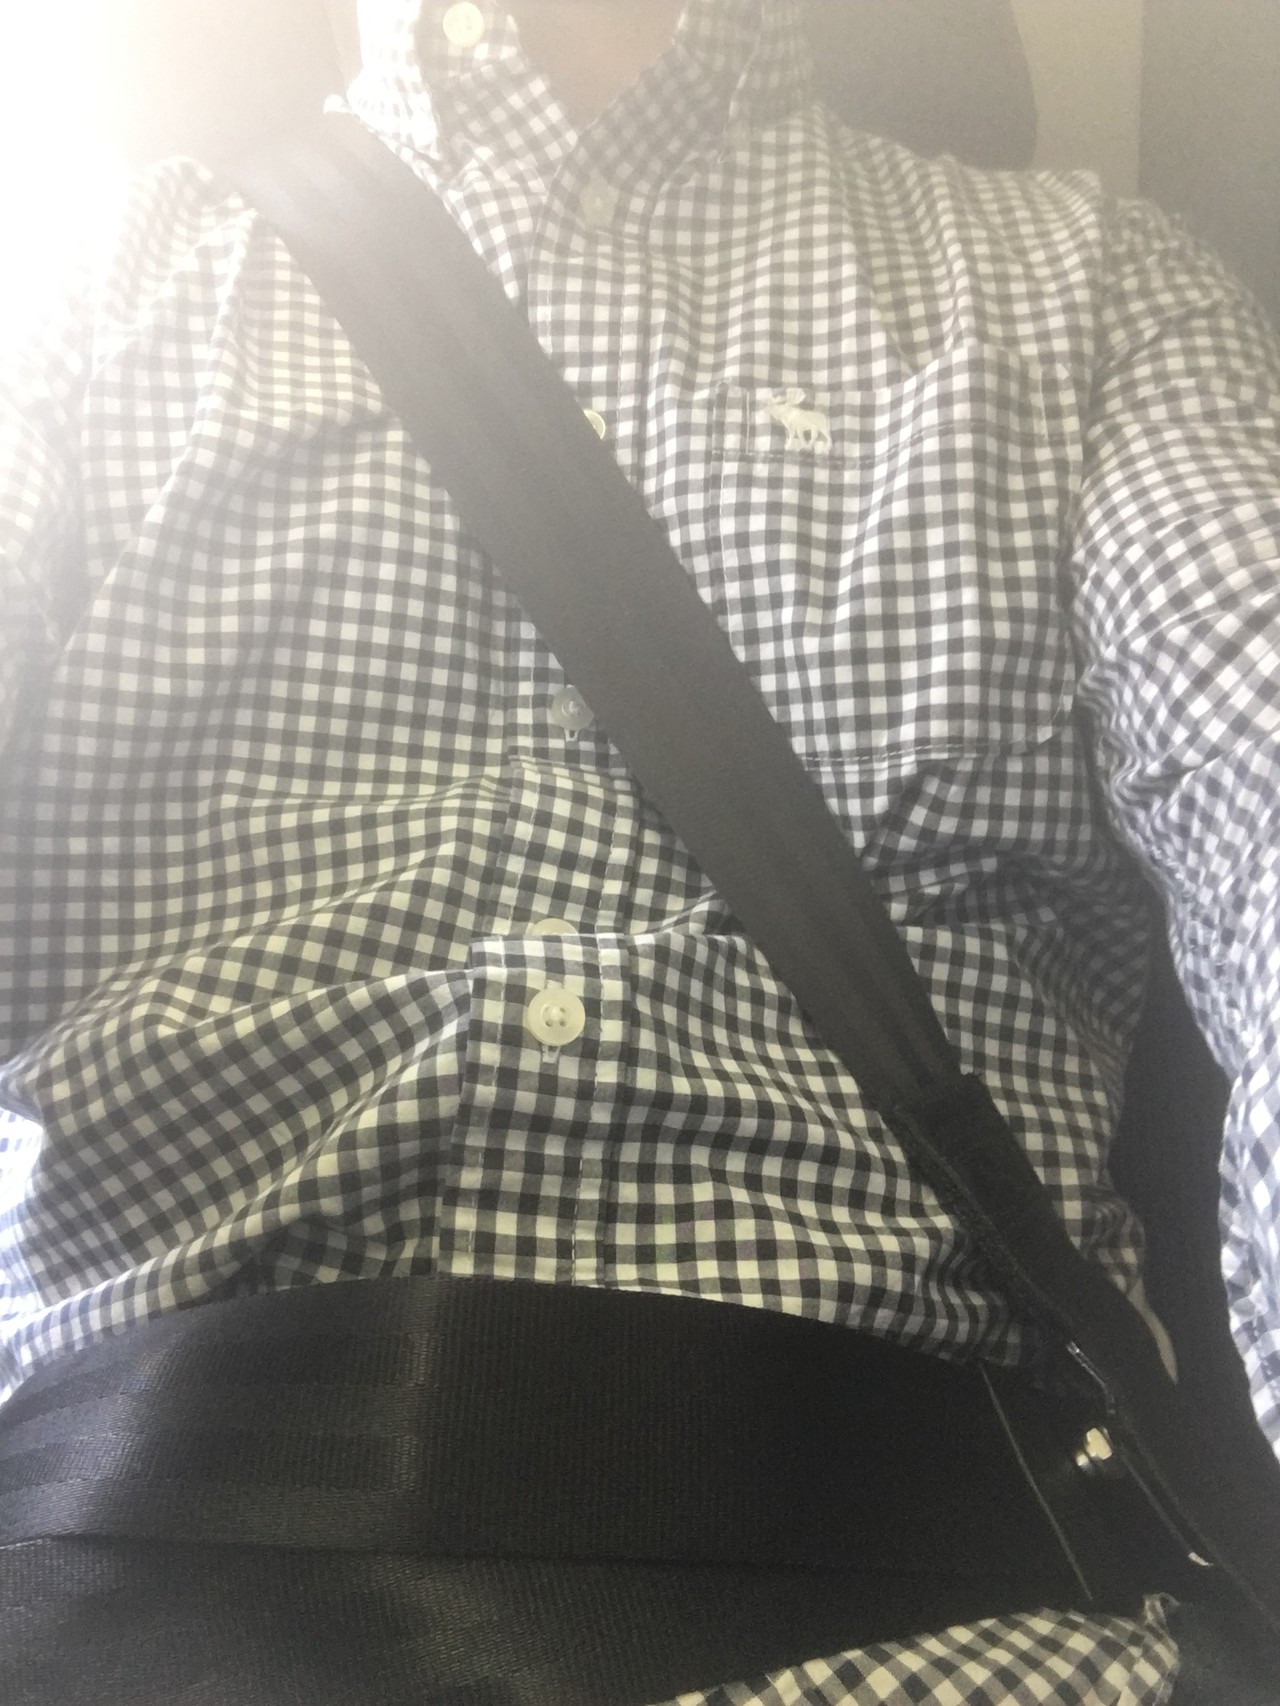 photo seatbelt